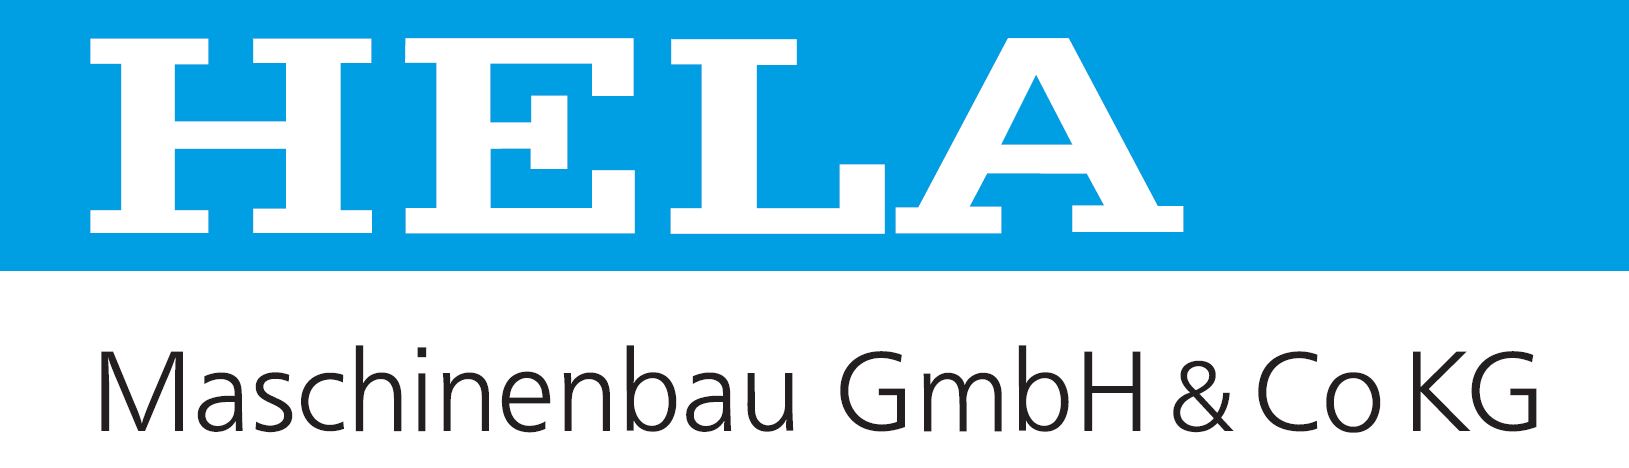 HELA Maschinenbau GmbH & Co. KG Logo